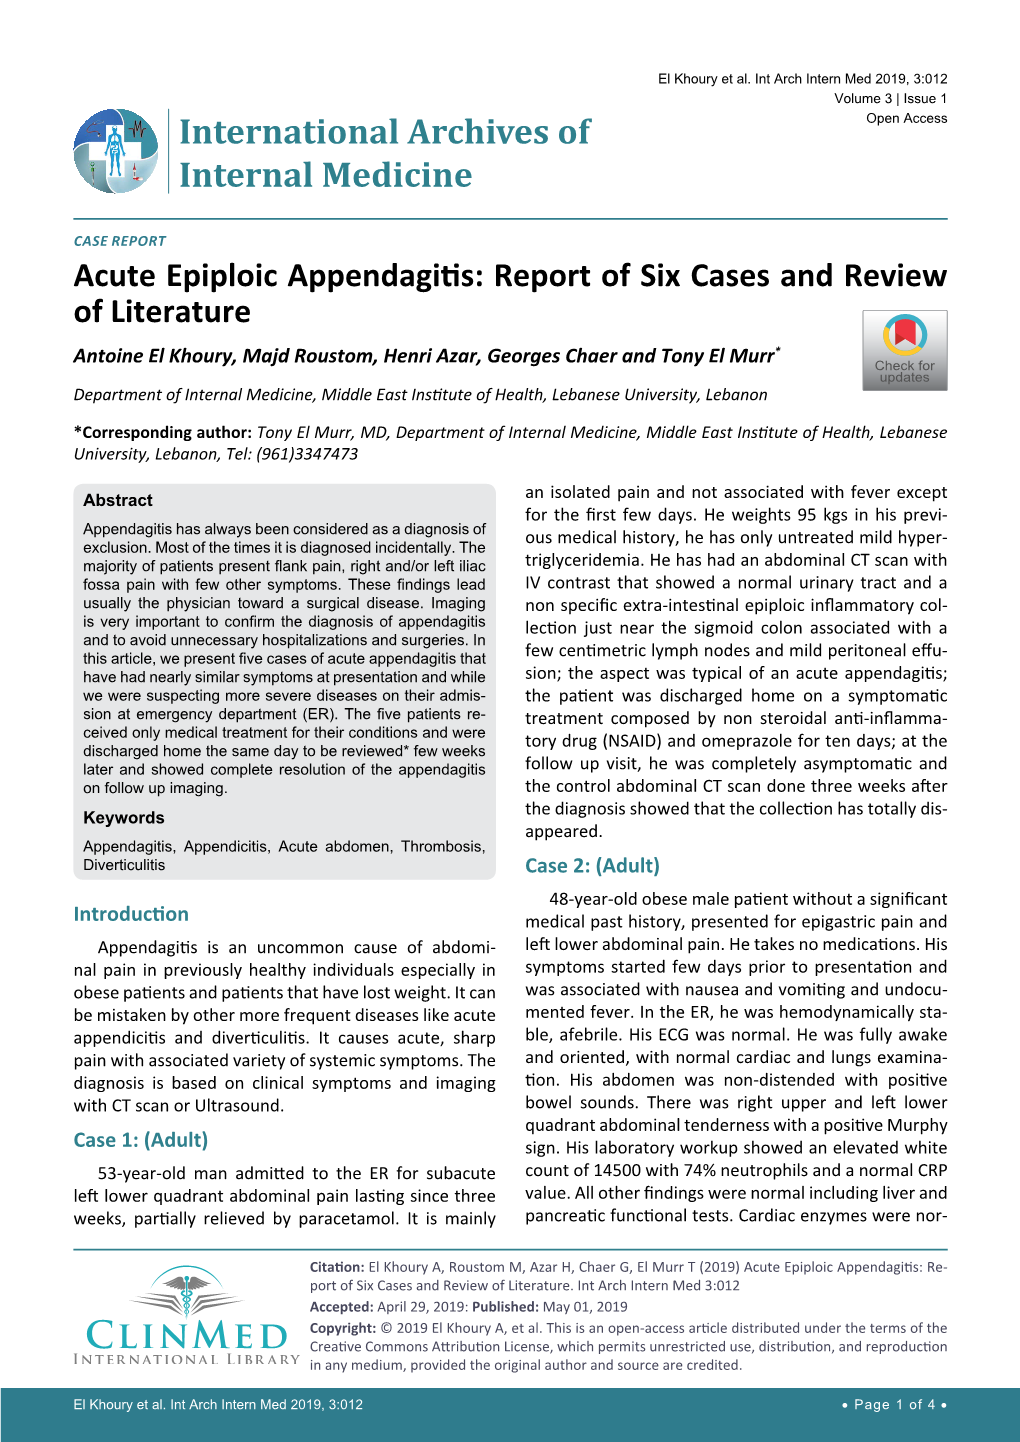 Acute Epiploic Appendagitis: Report of Six Cases and Review of Literature